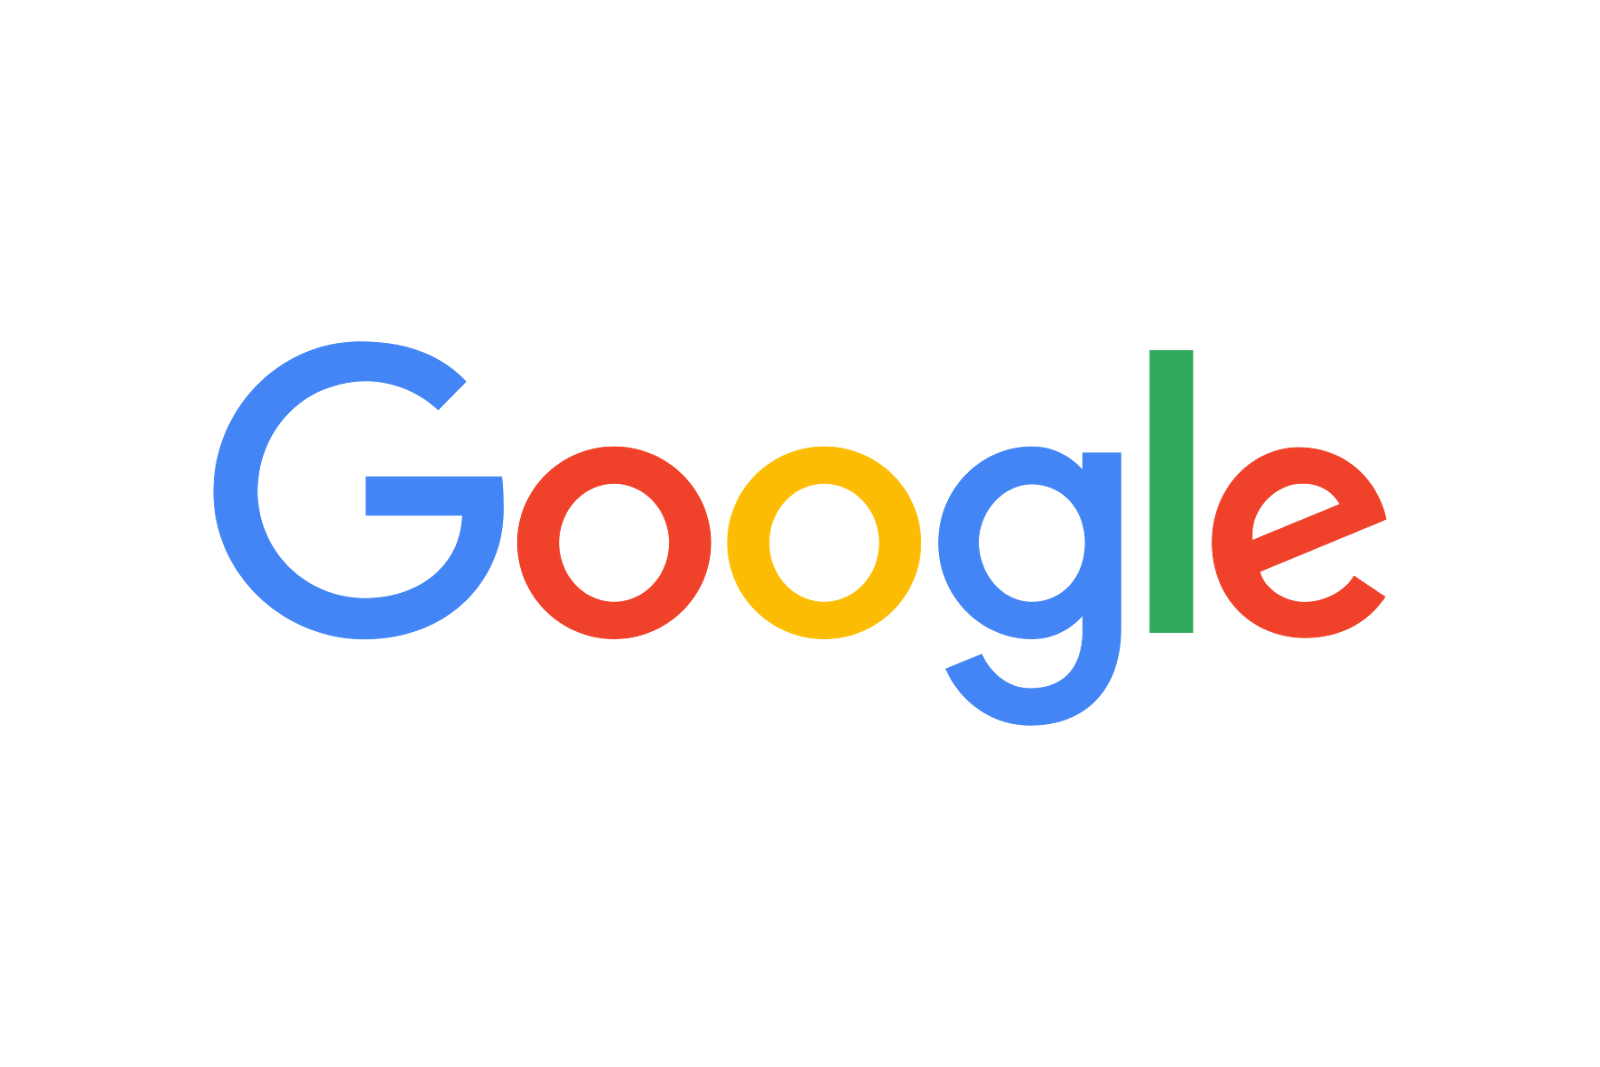 Google co